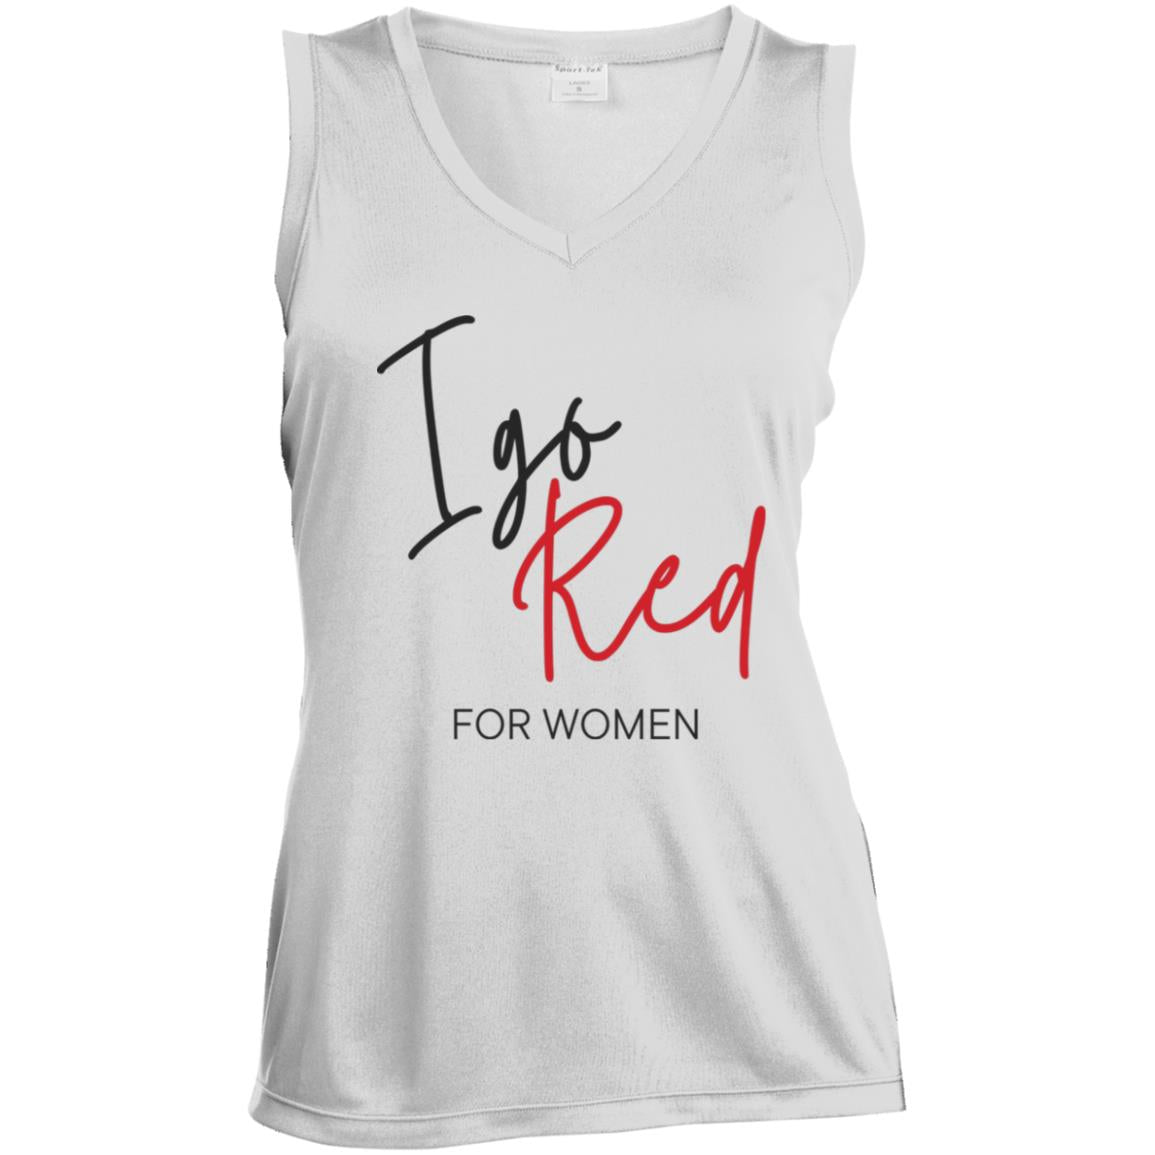 white sleeveless ladies tee that says "I Go Red for Women"